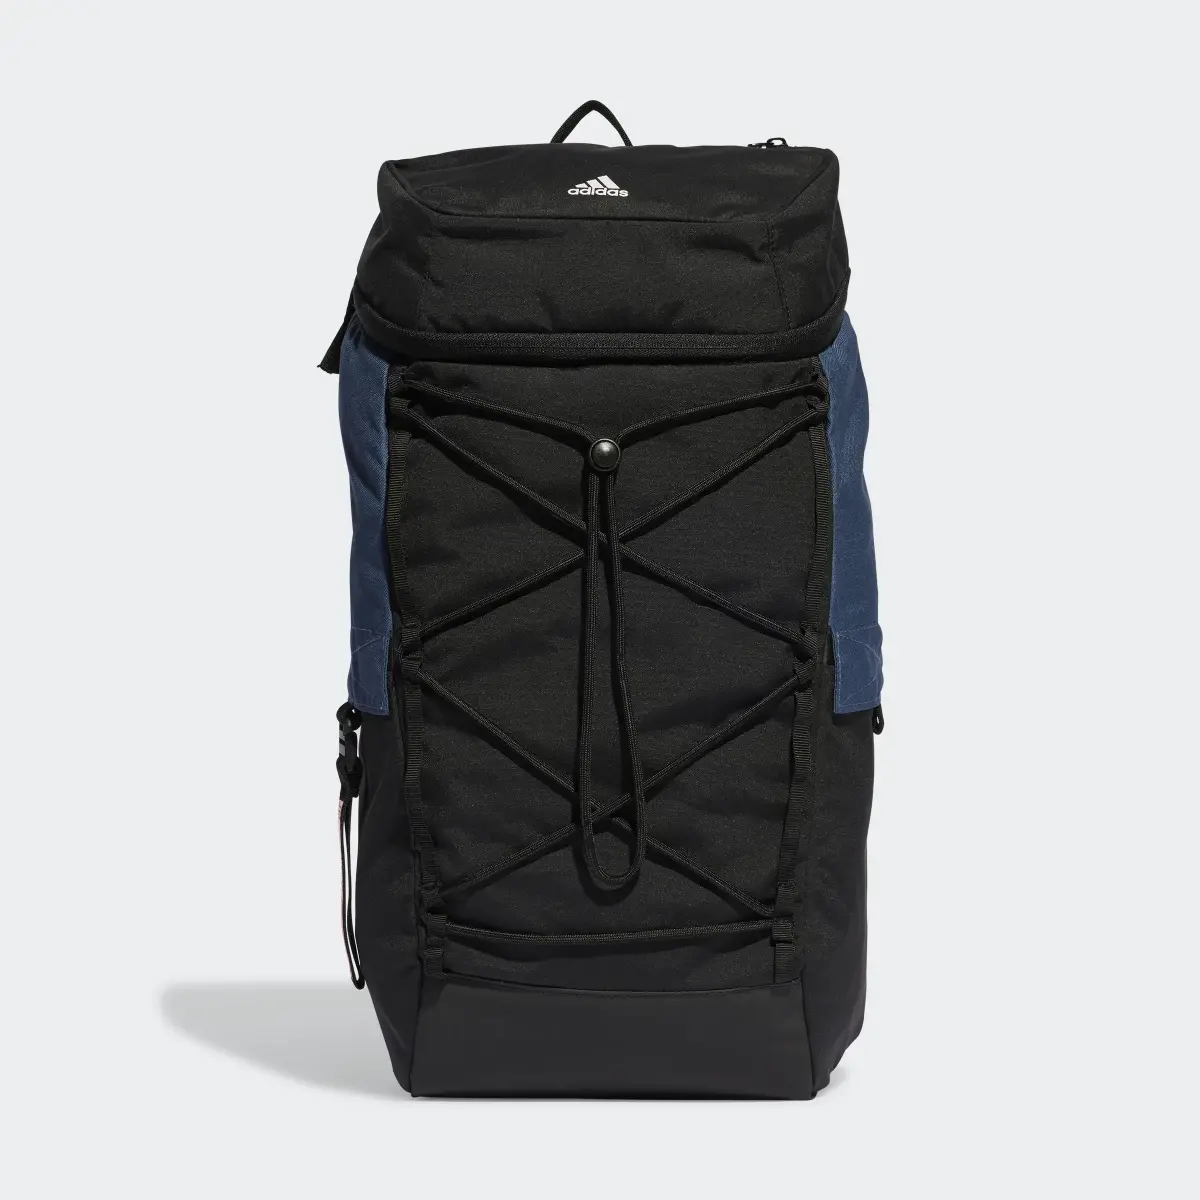 Adidas City Xplorer Backpack. 2